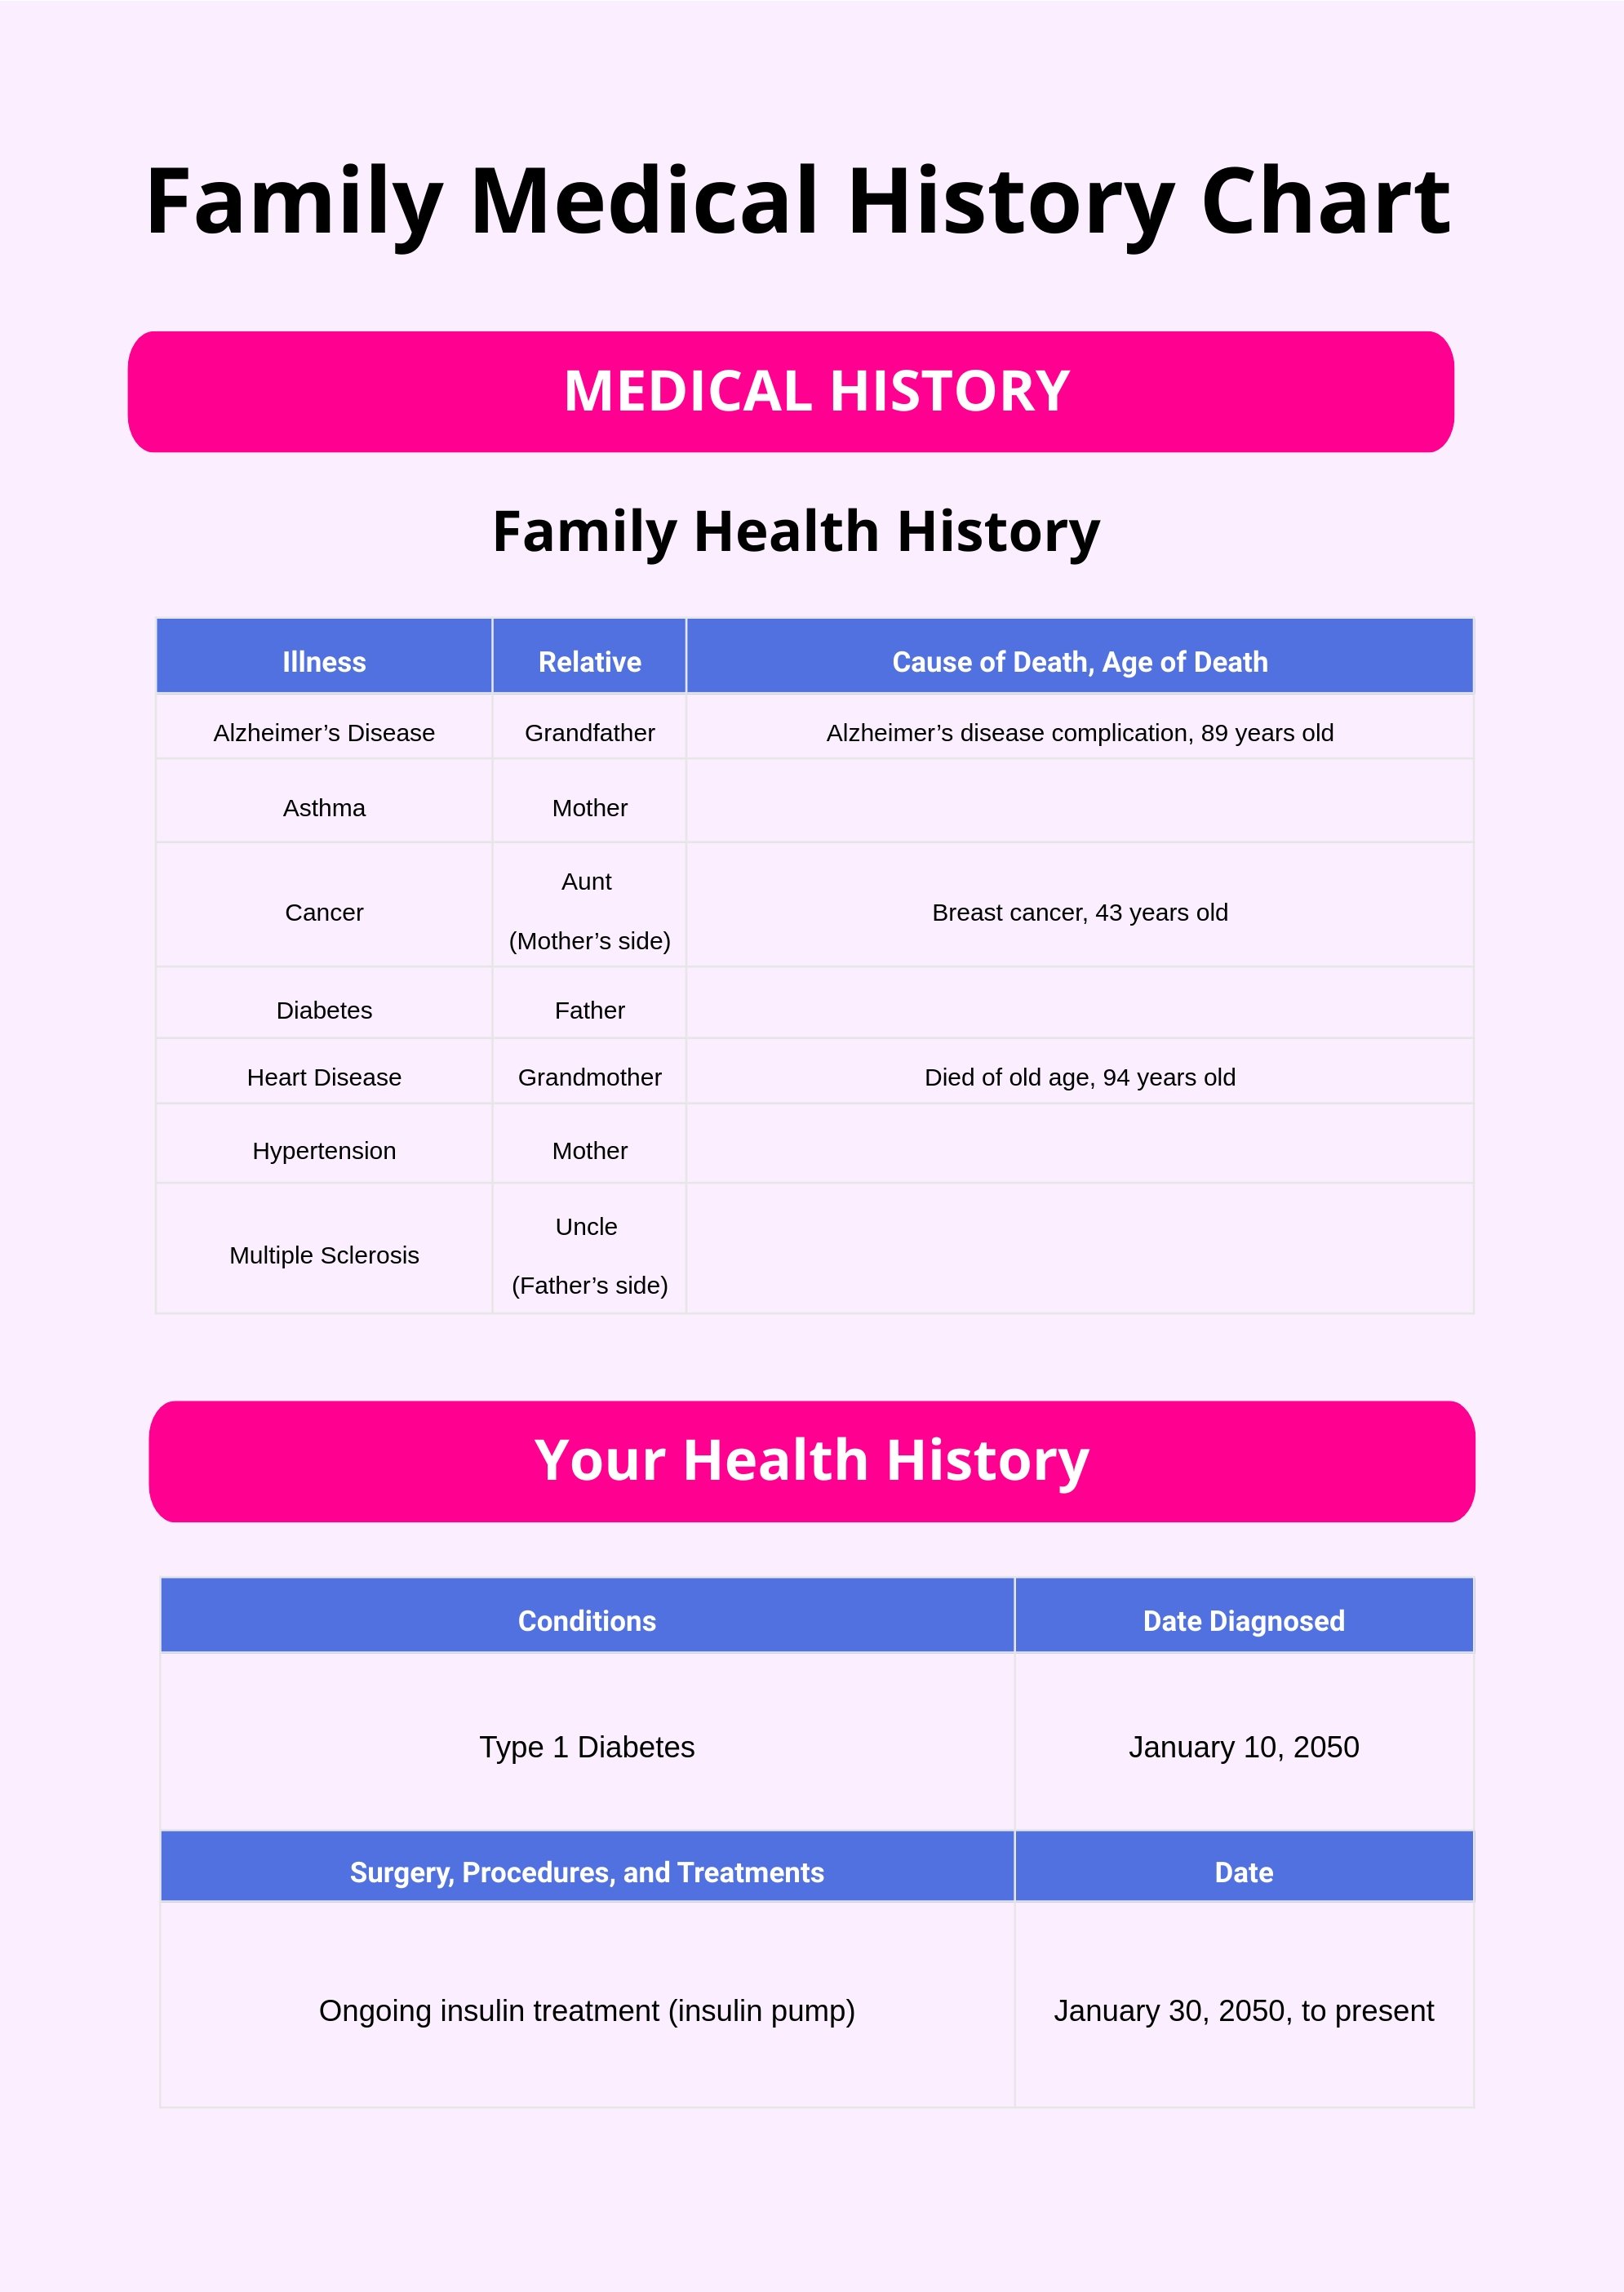 Family Medical History Chart in PDF, Illustrator